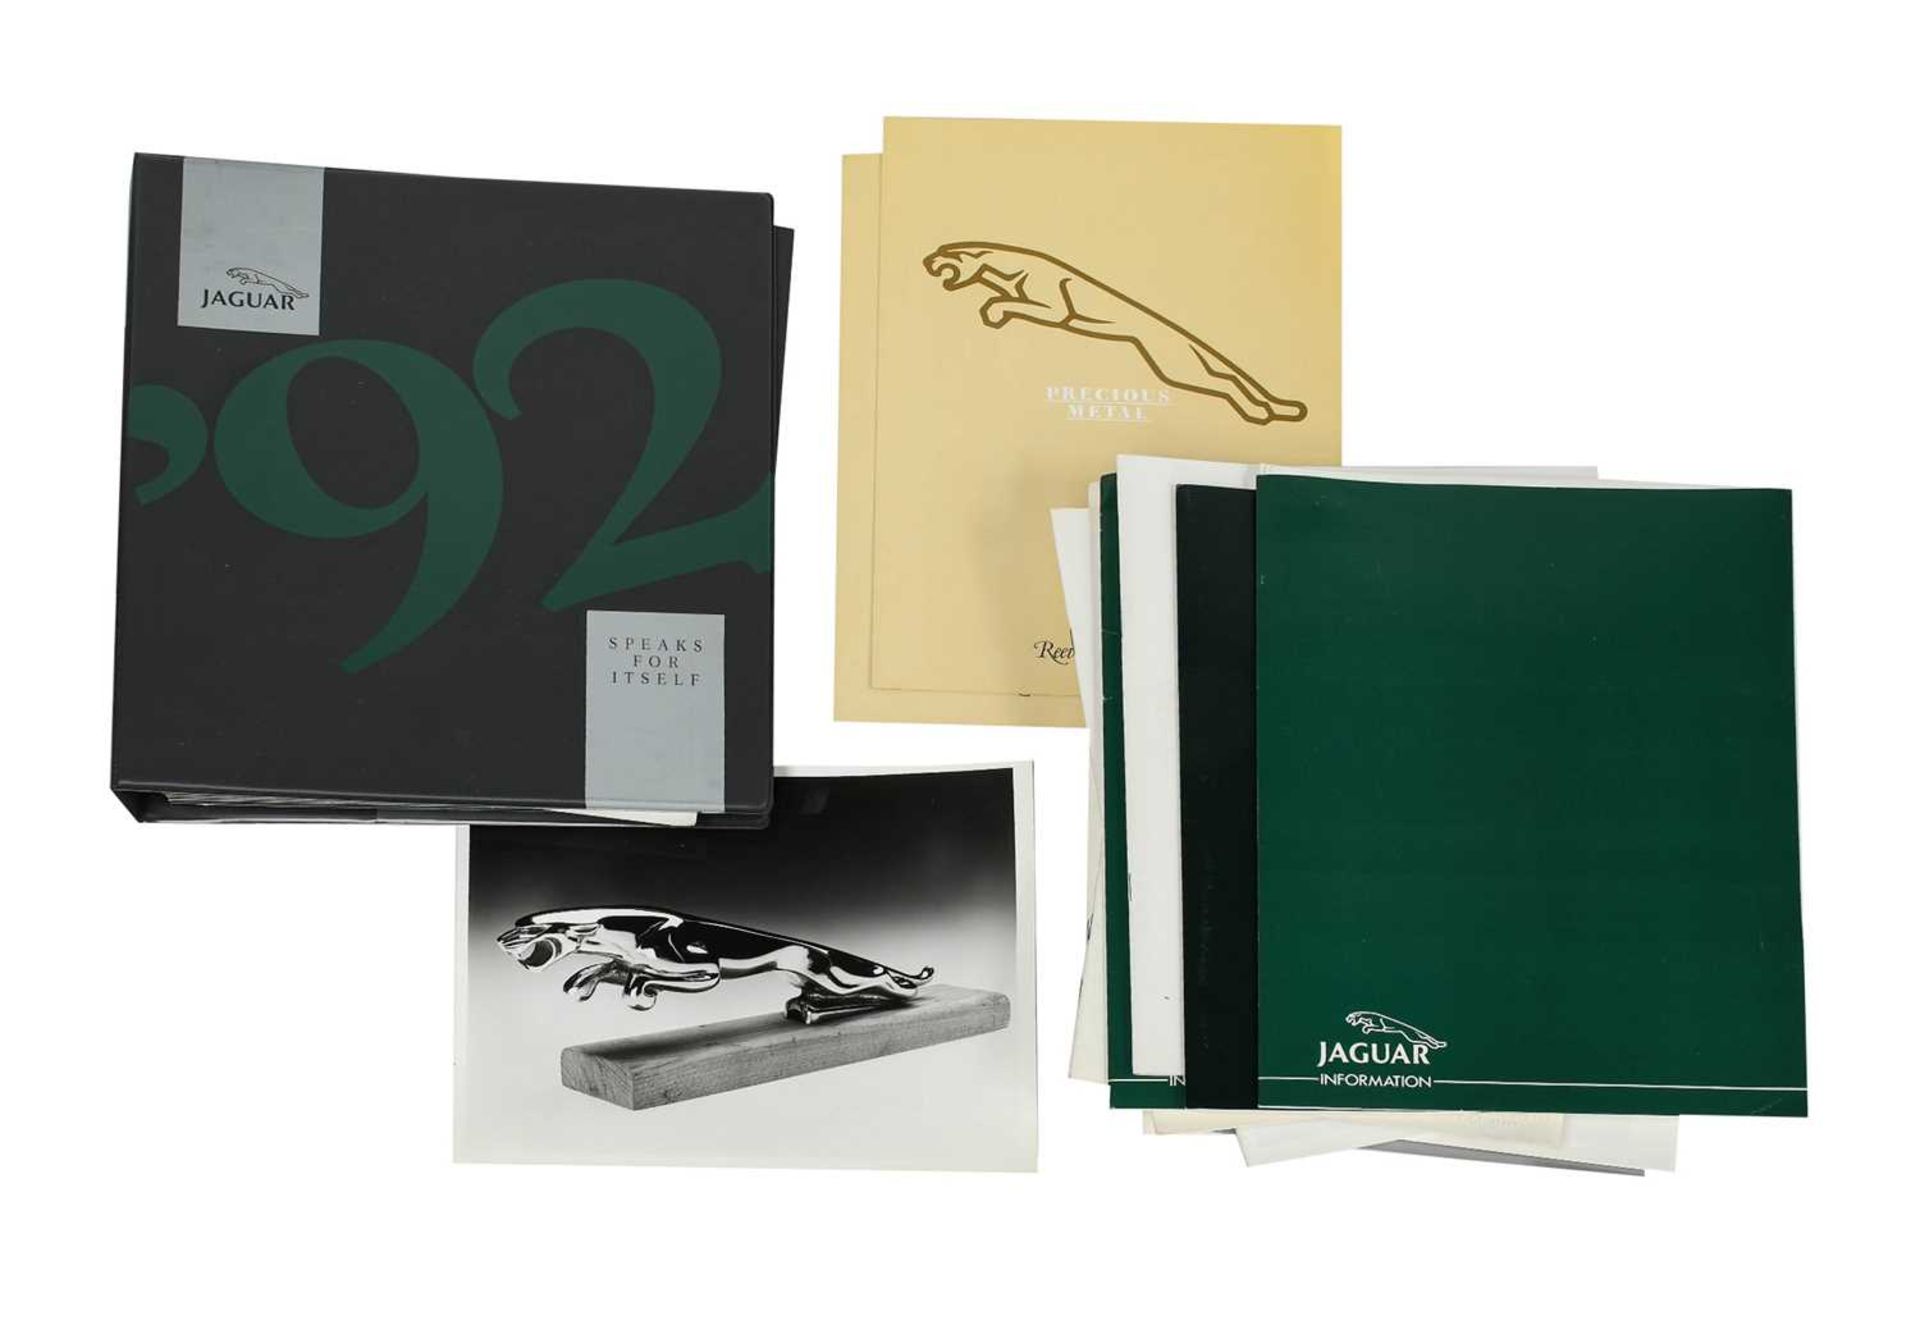 Jaguar and Daimler Interest: A 1992 Speaks for Itself advertising campaign folder, together with